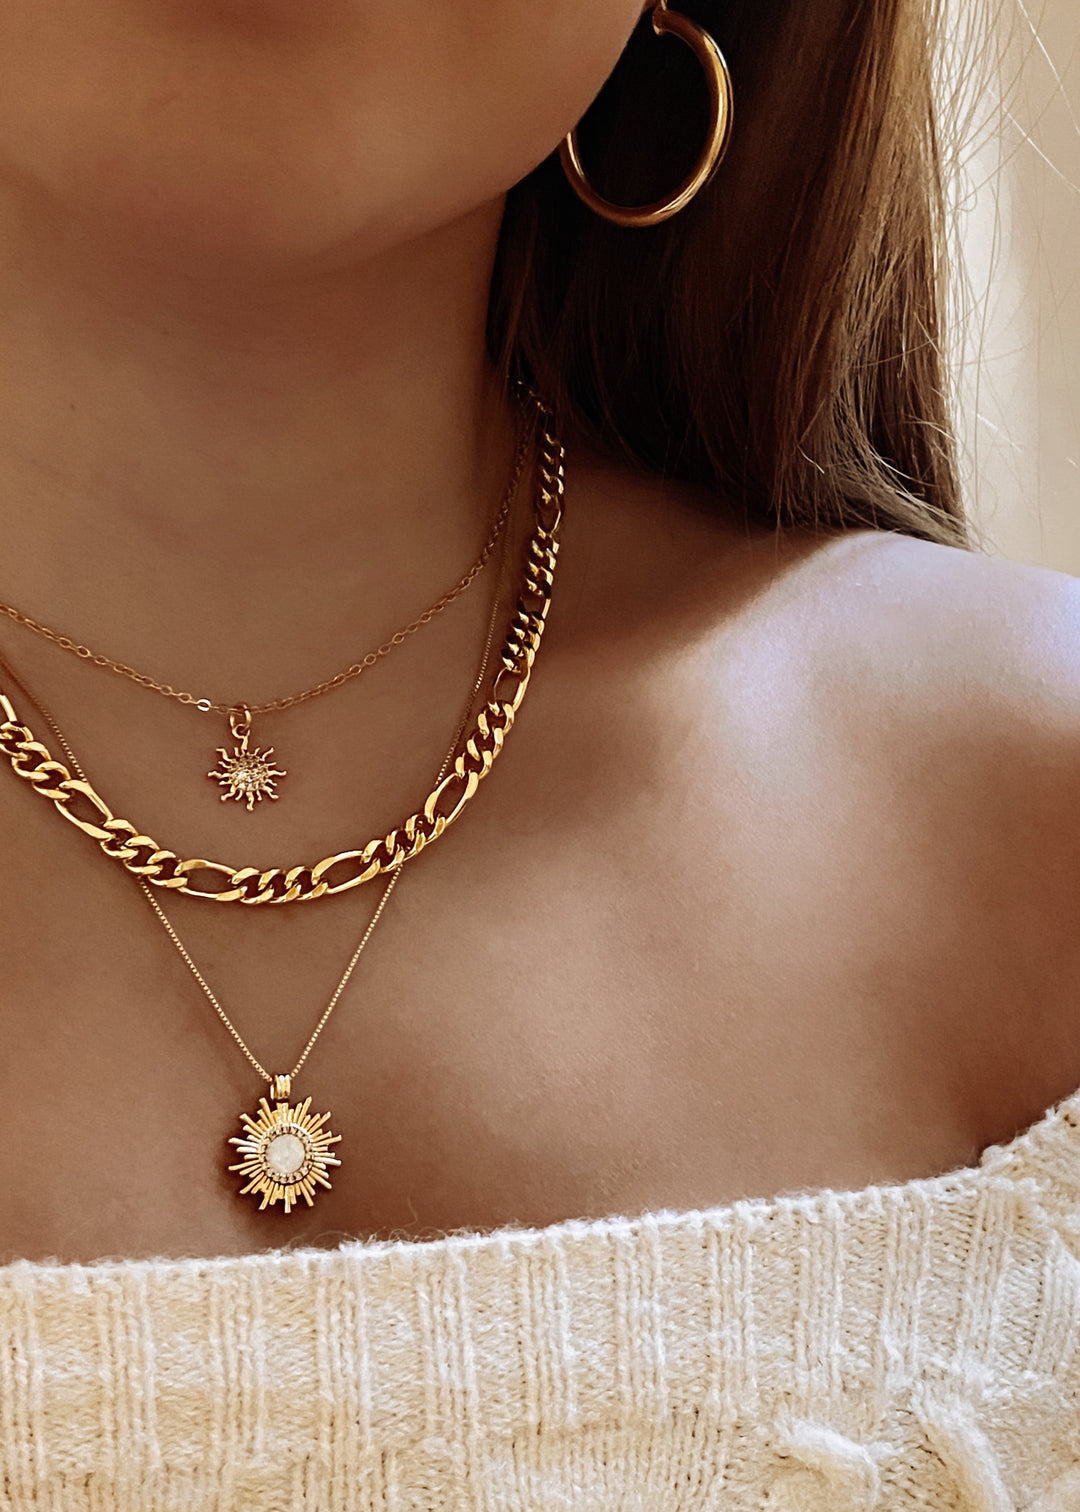 Cacey Sunburst Necklace - Gold Filled